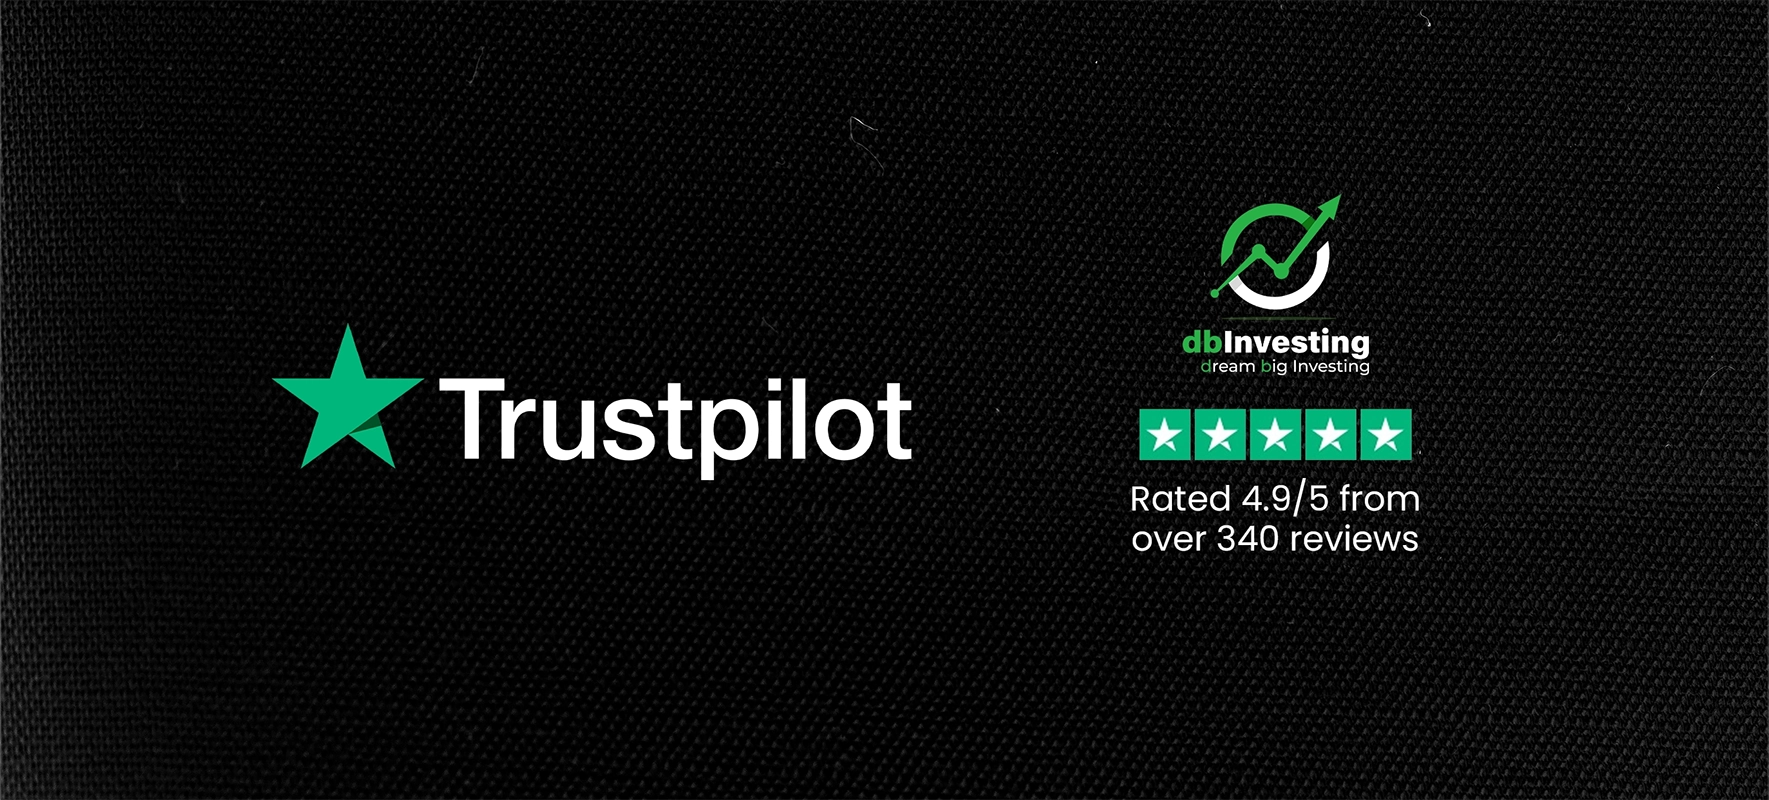 DBInvesting revisão Trustpilot